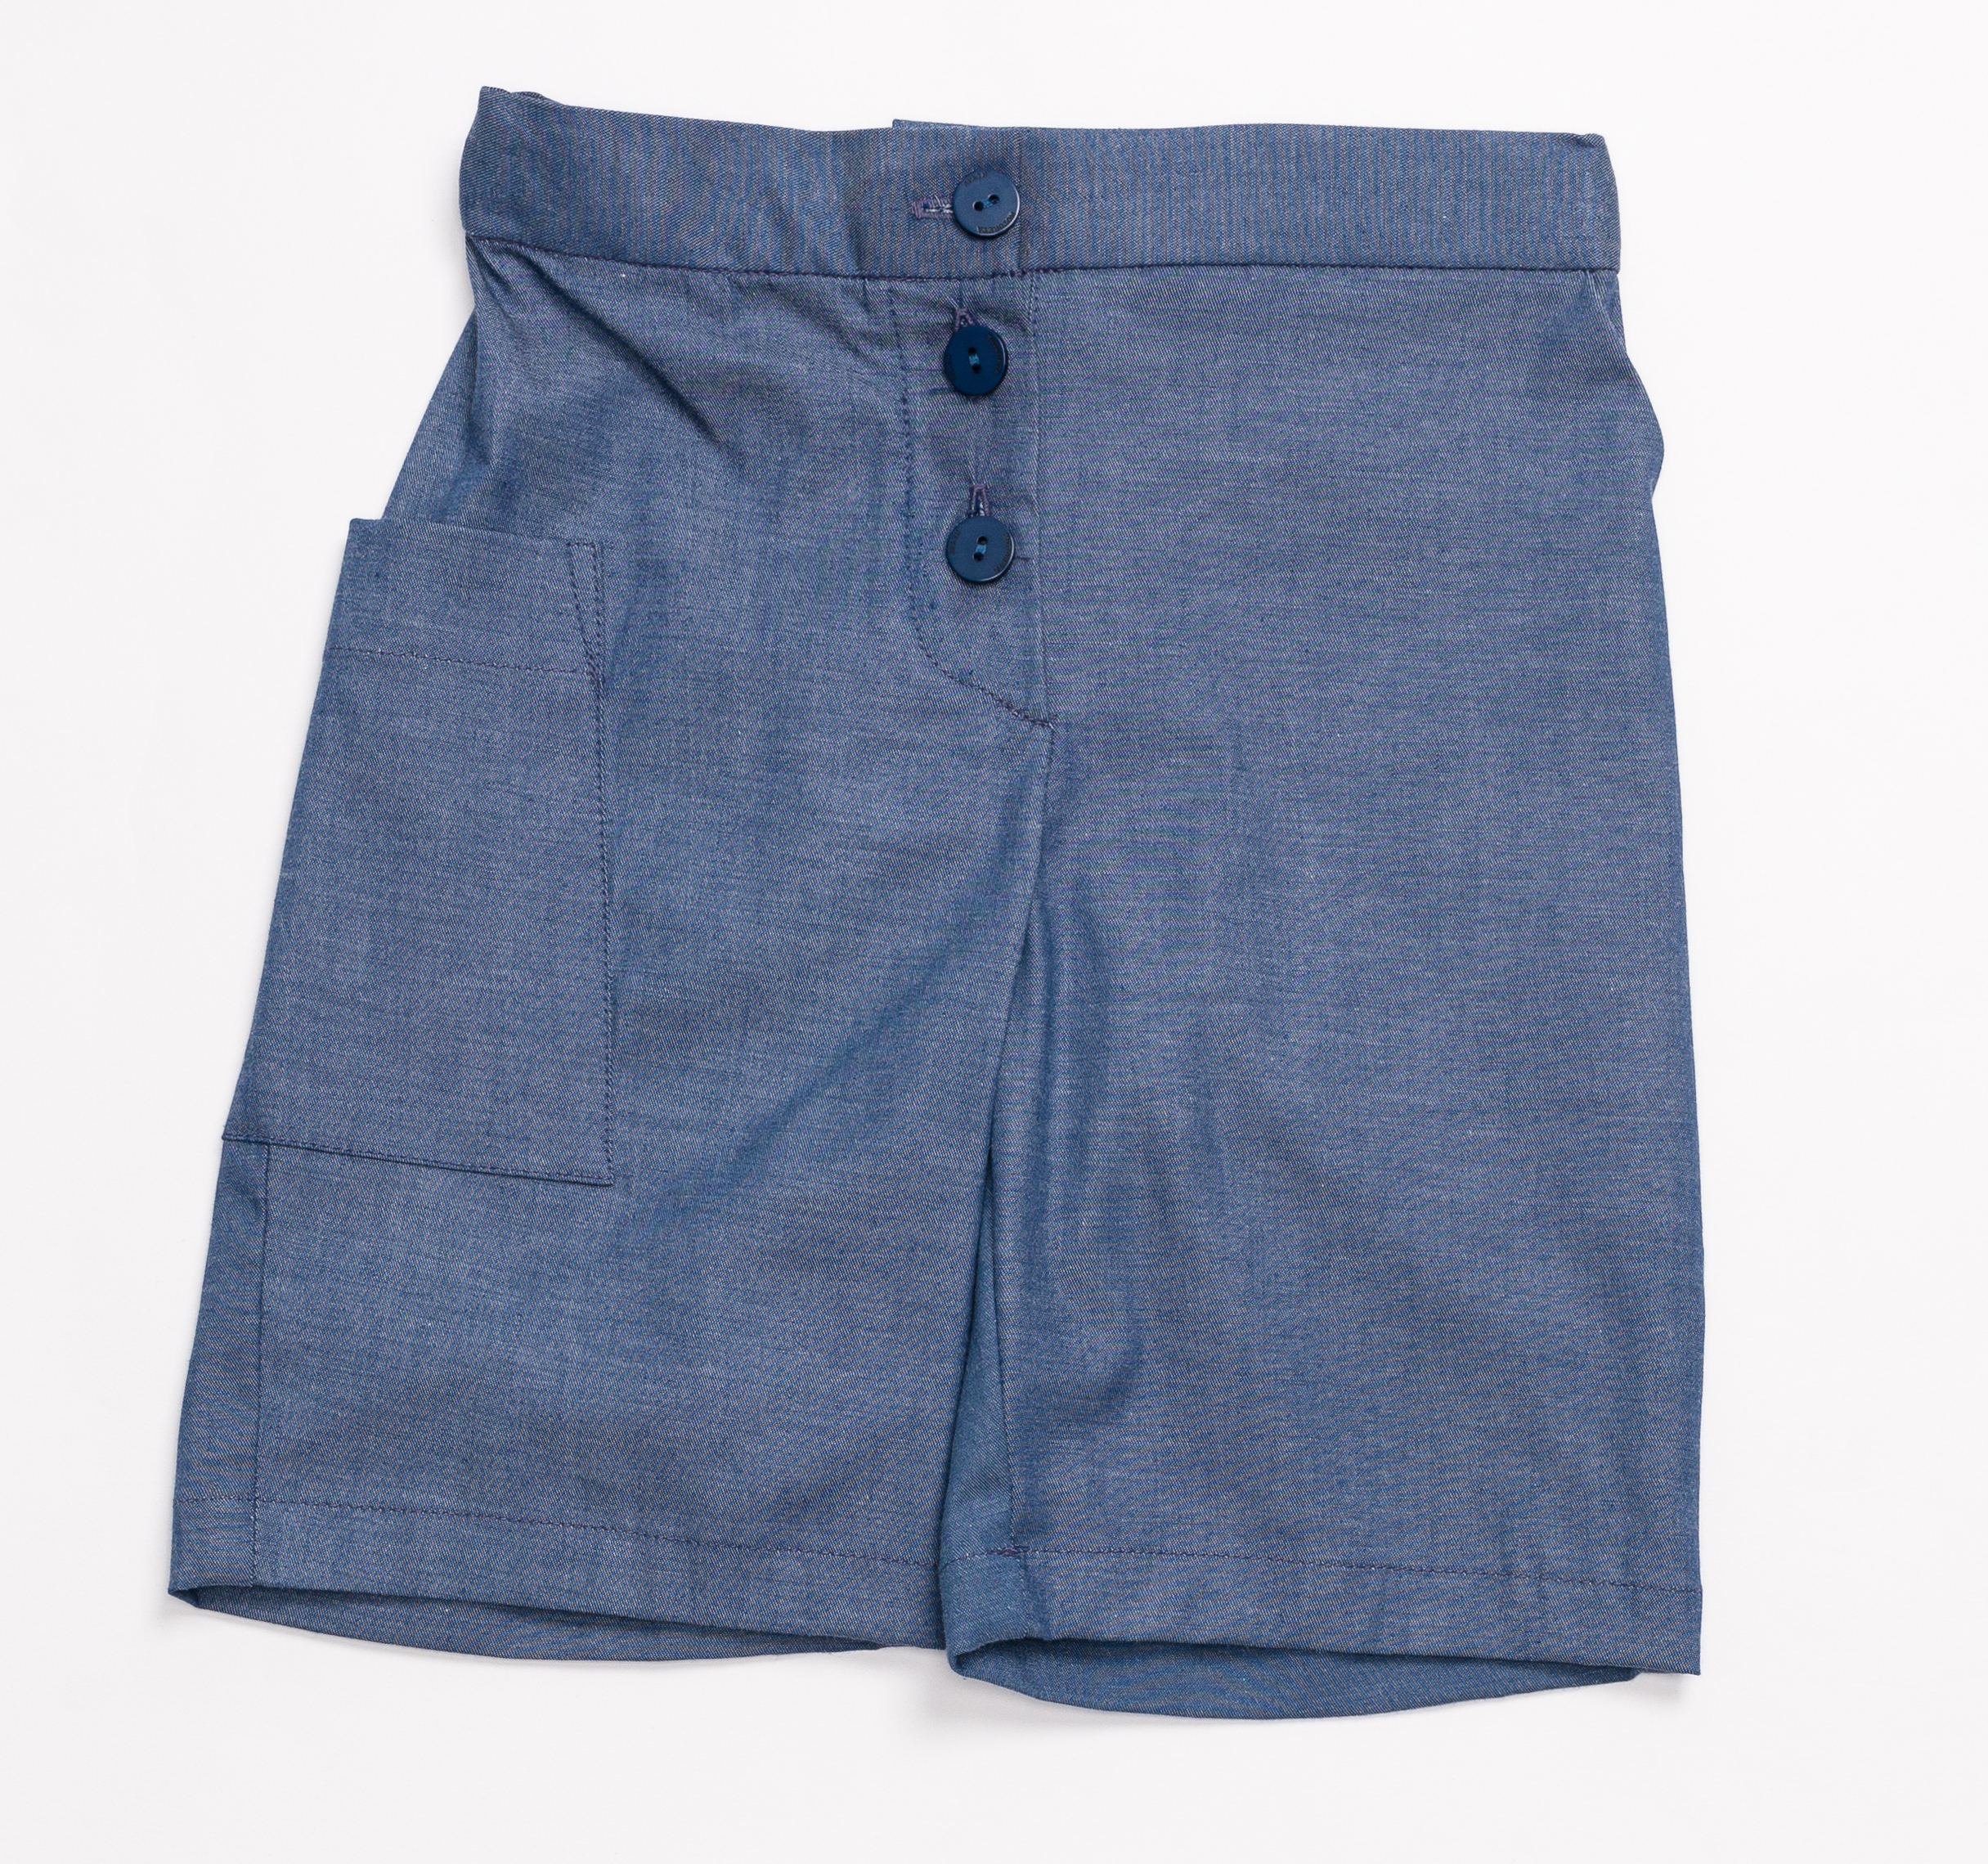                                                                                                                                              Pocket shorts-Denim 